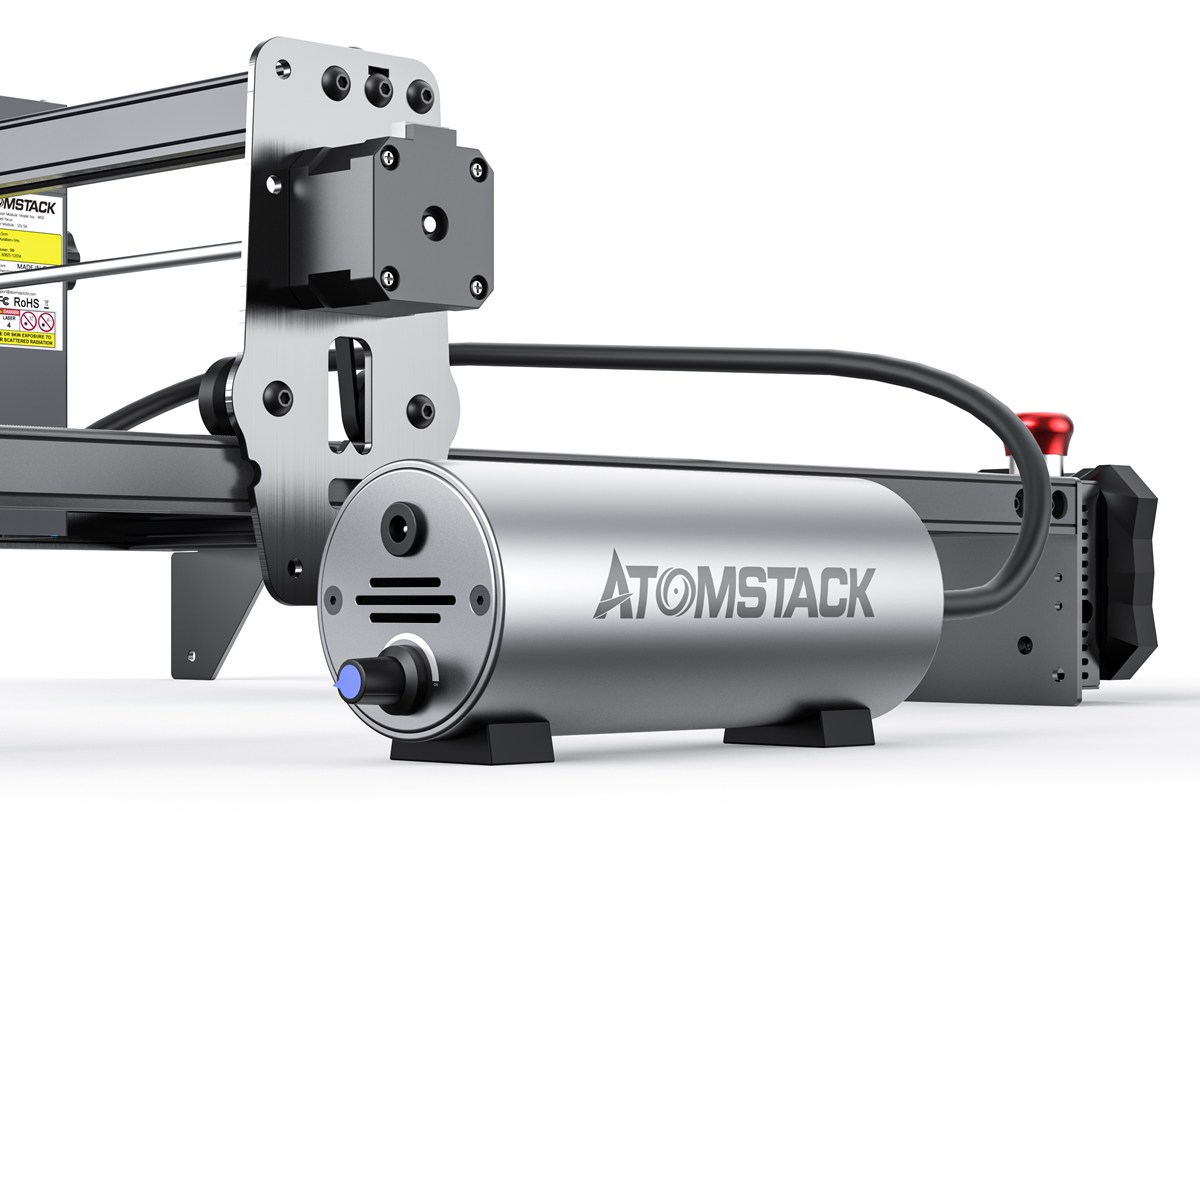 Atomstack-Air-Assist-System-for-Laser-Engraving-Machine-Laser-Cutting-Engraving-Air-assisted-Accesso-1932834-4